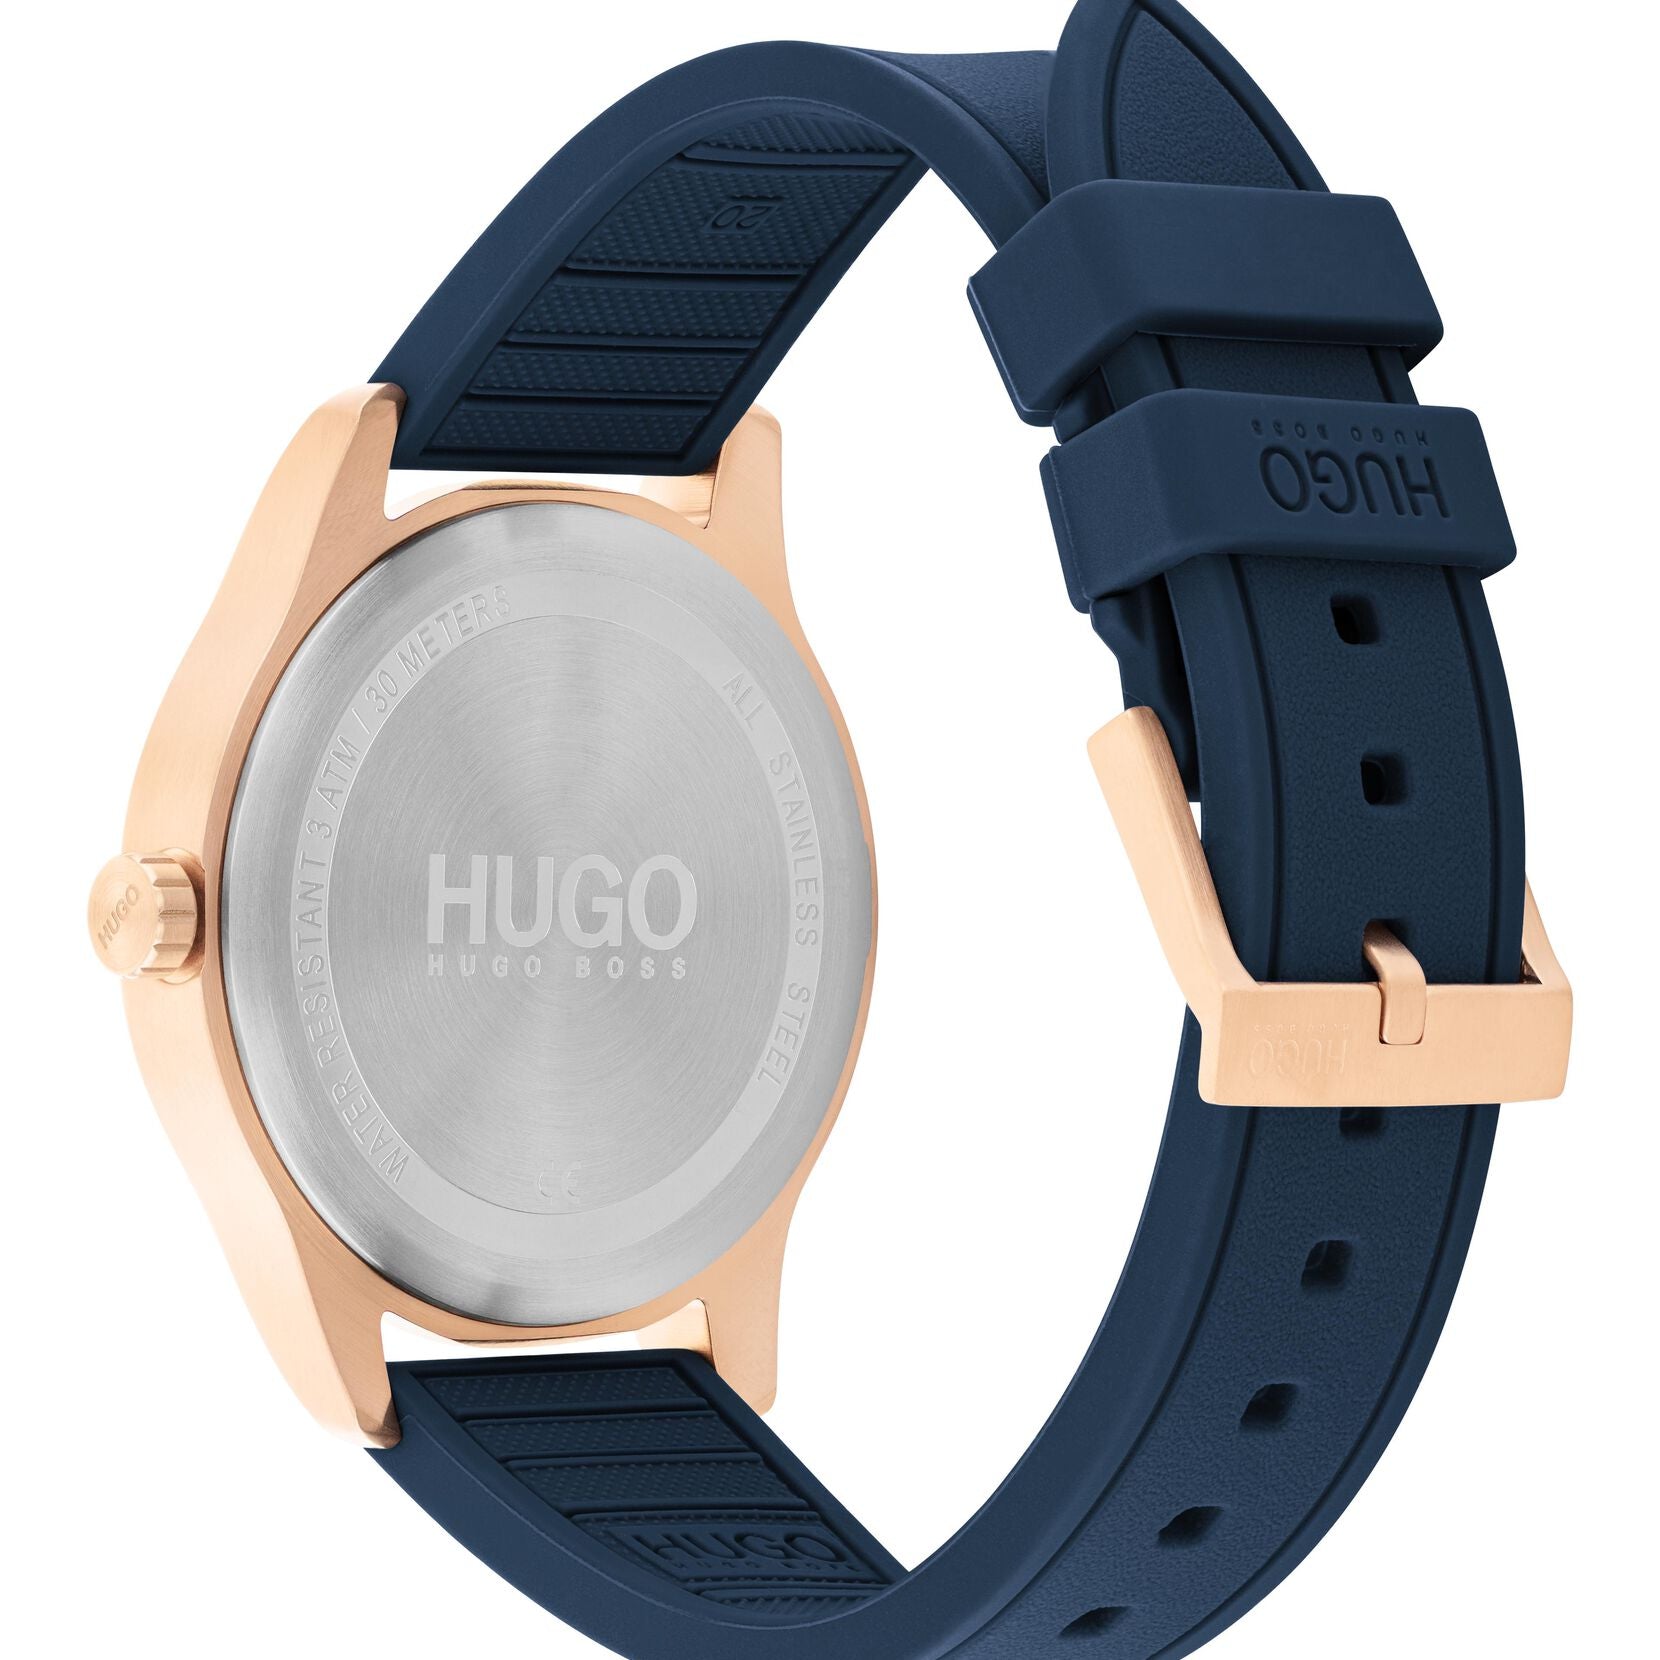 Hugo Boss Hugo Boss Move Dial Men's Watch 1530042